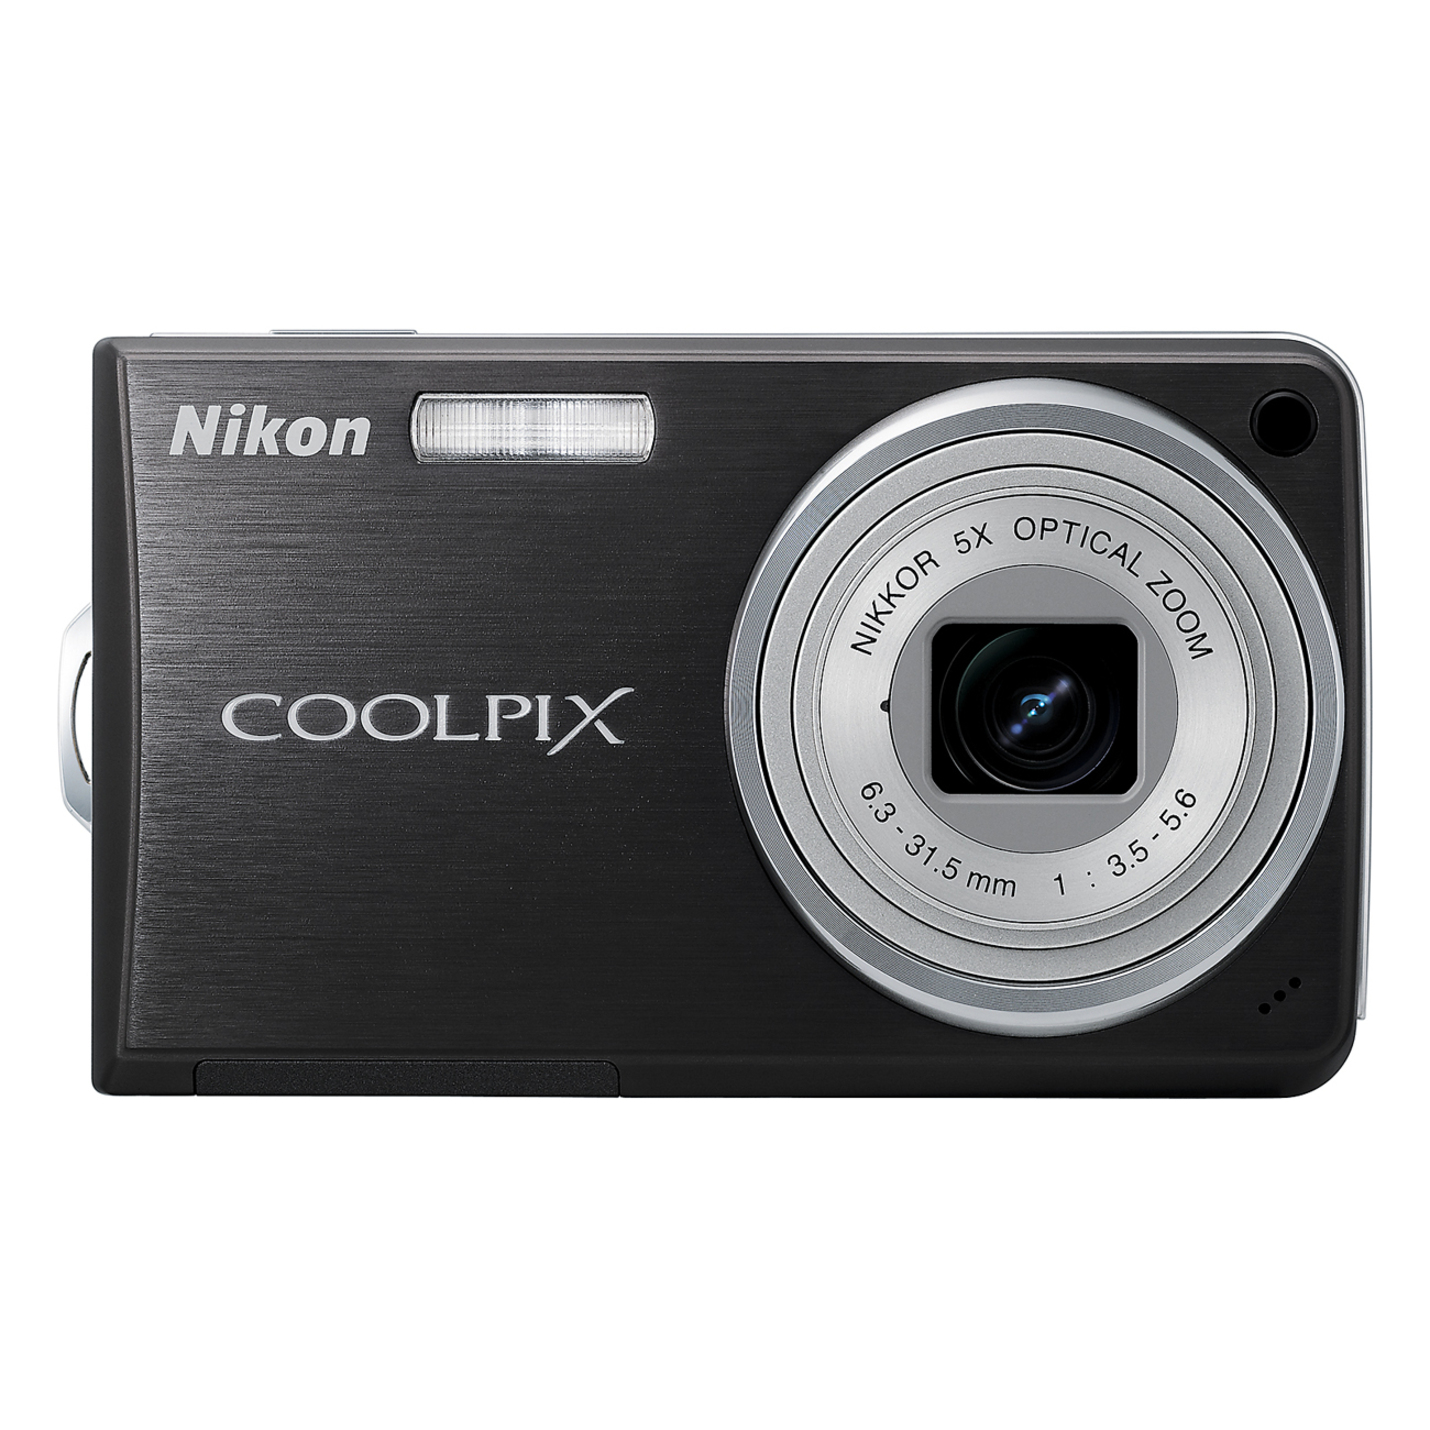 Nikon Coolpix S550 10 Megapixel Compact Camera, Graphite Black - image 1 of 2